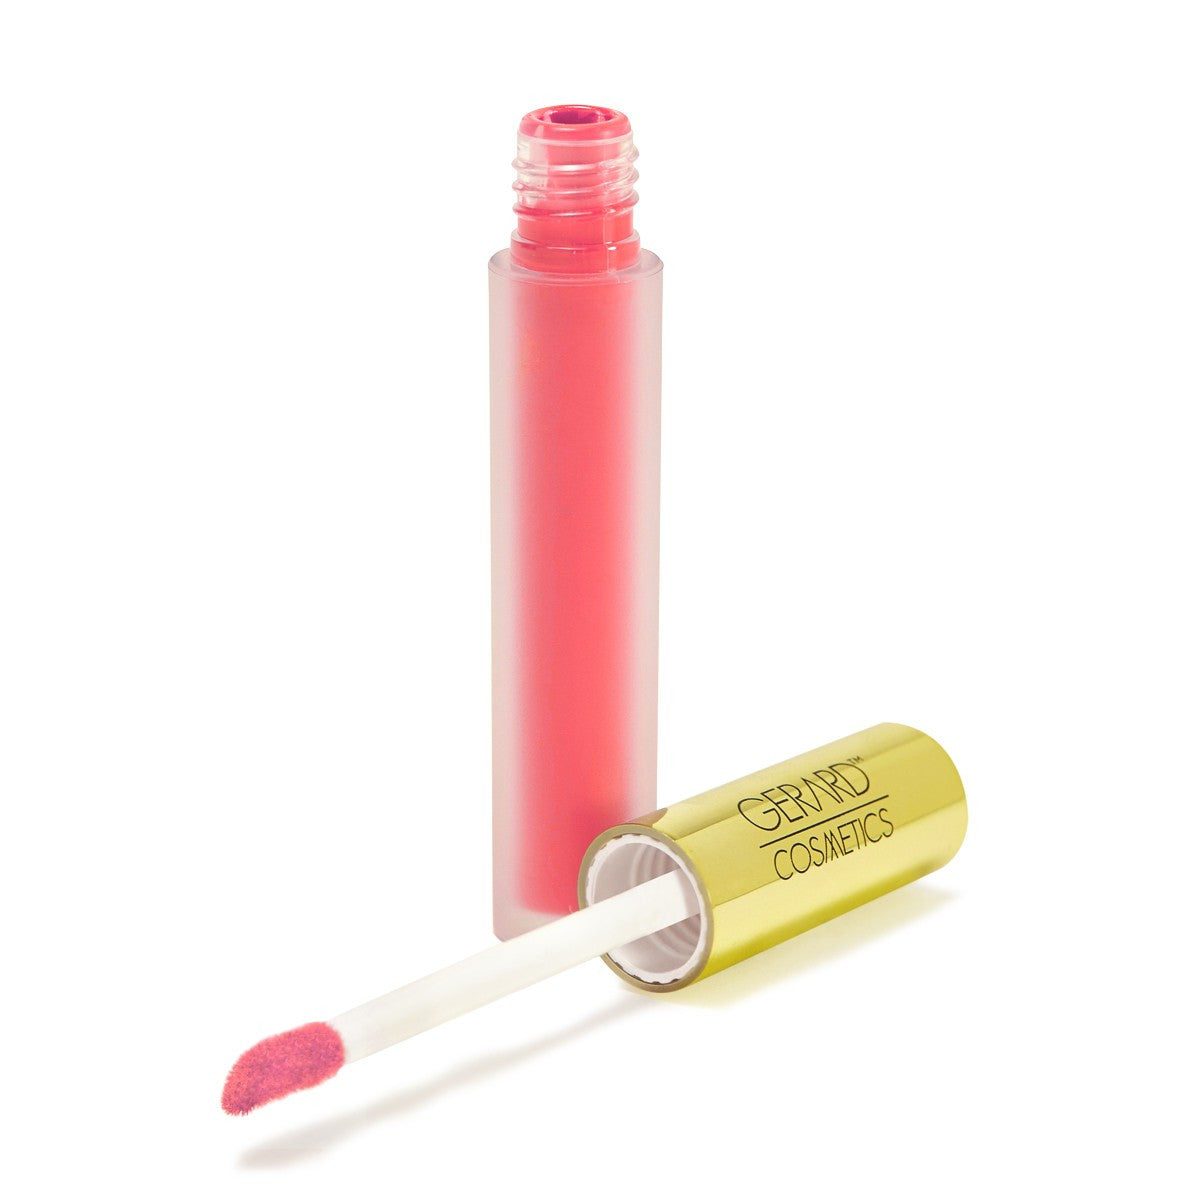 Gerard Cosmetics Hydra Matte Liquid Lipstick 'West Coast'